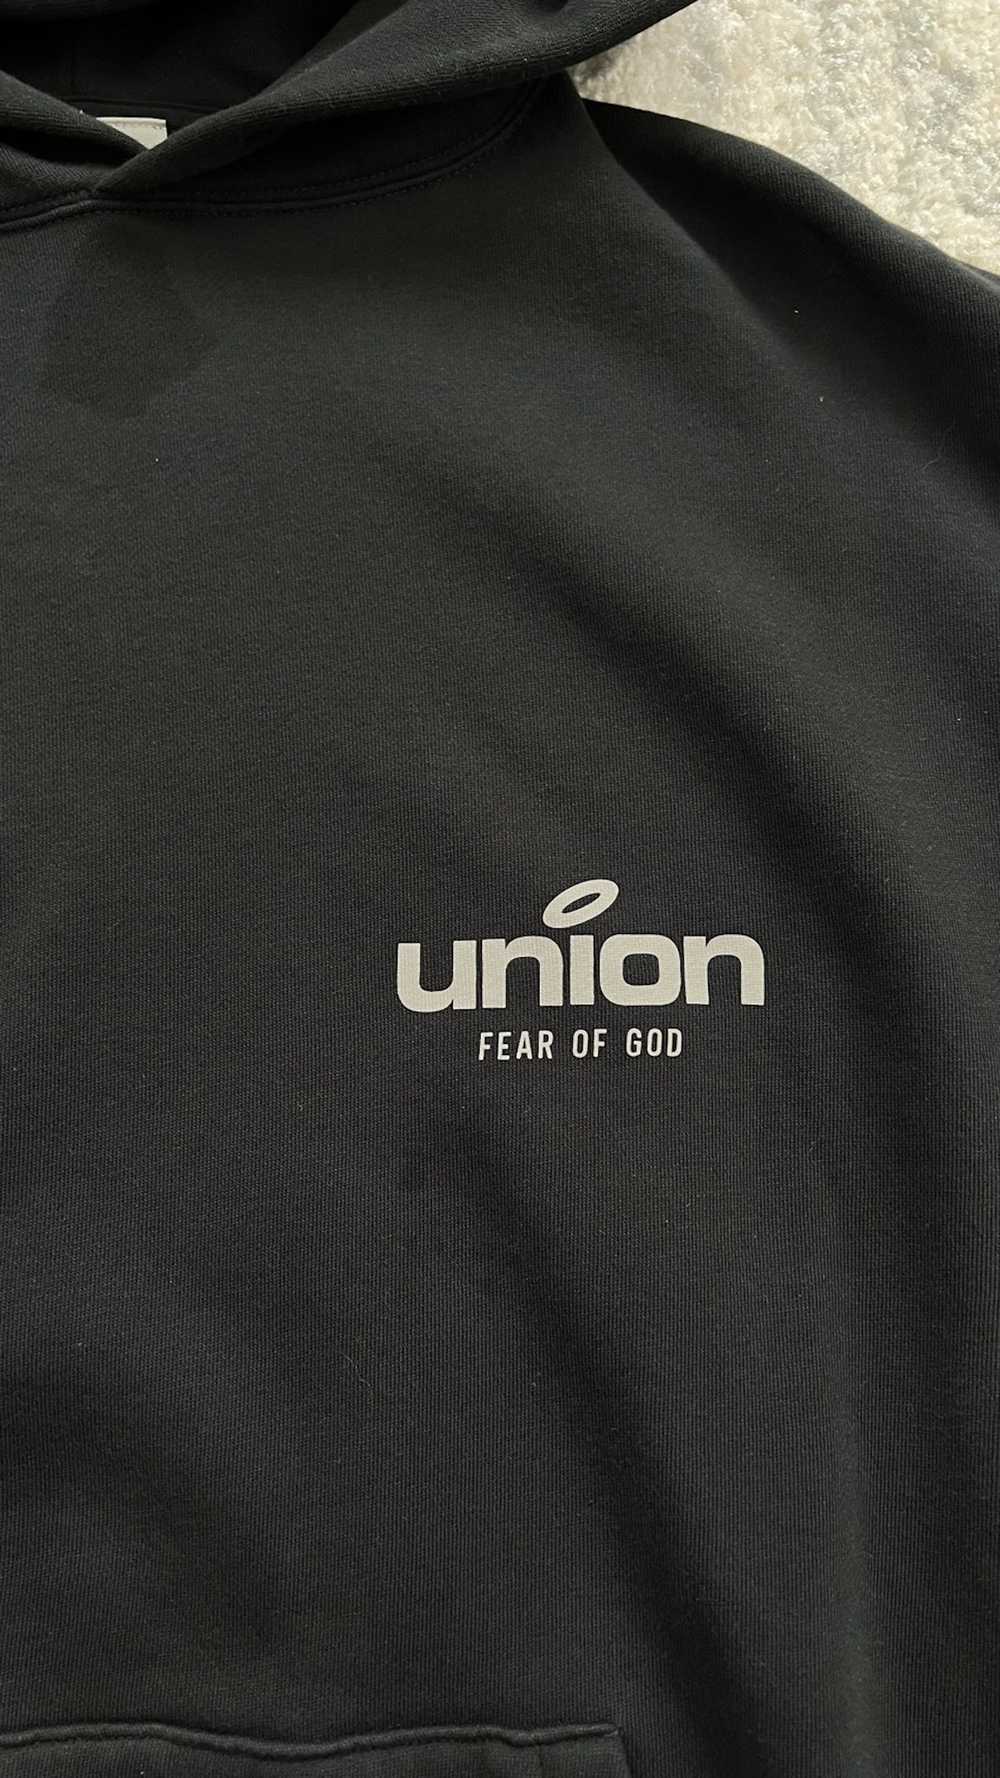 Fear of God × Union La Fear of God X Union Hoodie - image 1